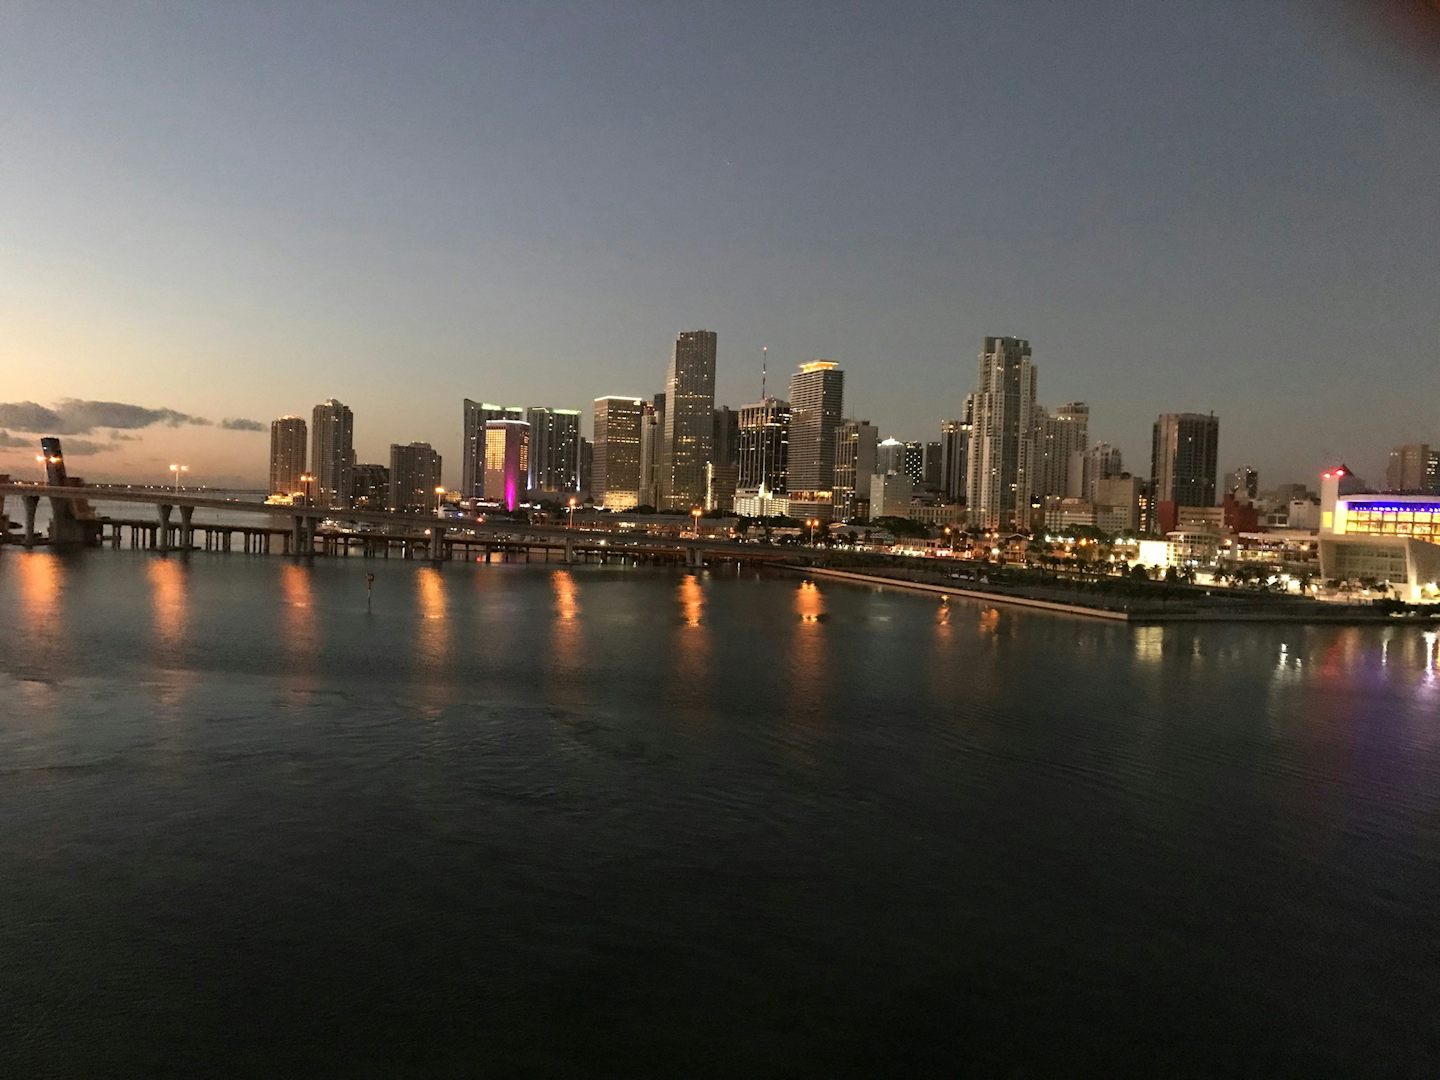 Miami at dawn on arrival